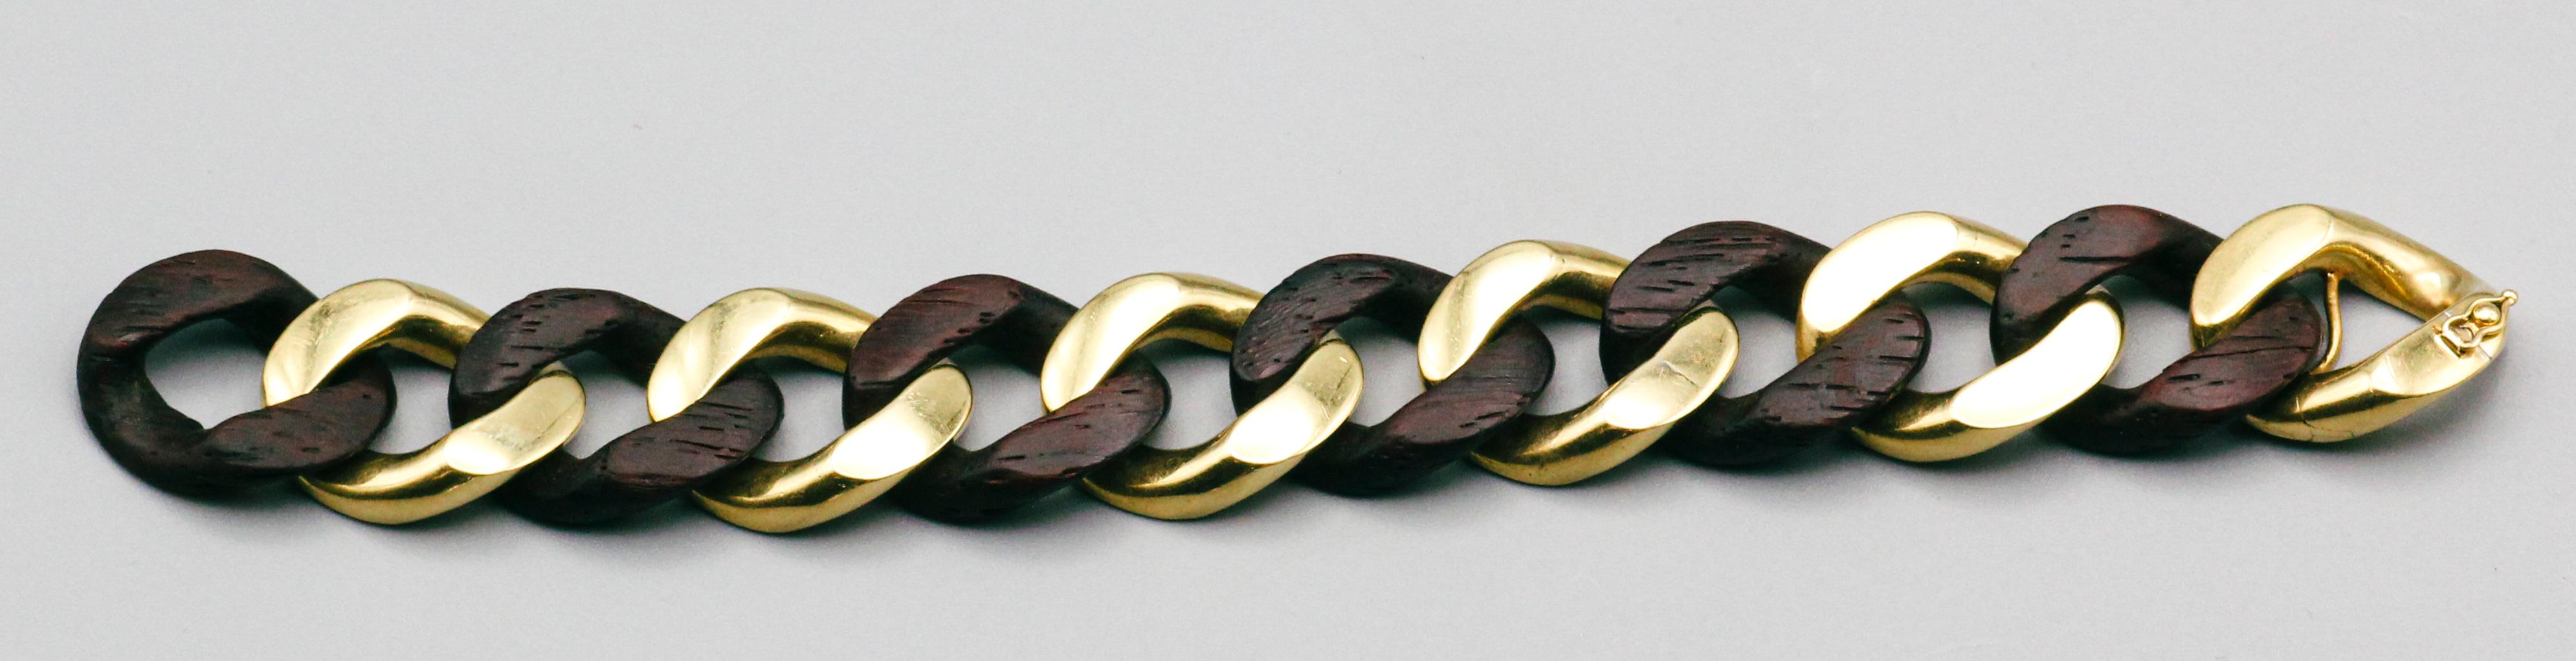 Bulgari Wood and 18k Gold Curb Link Bracelet  For Sale 2